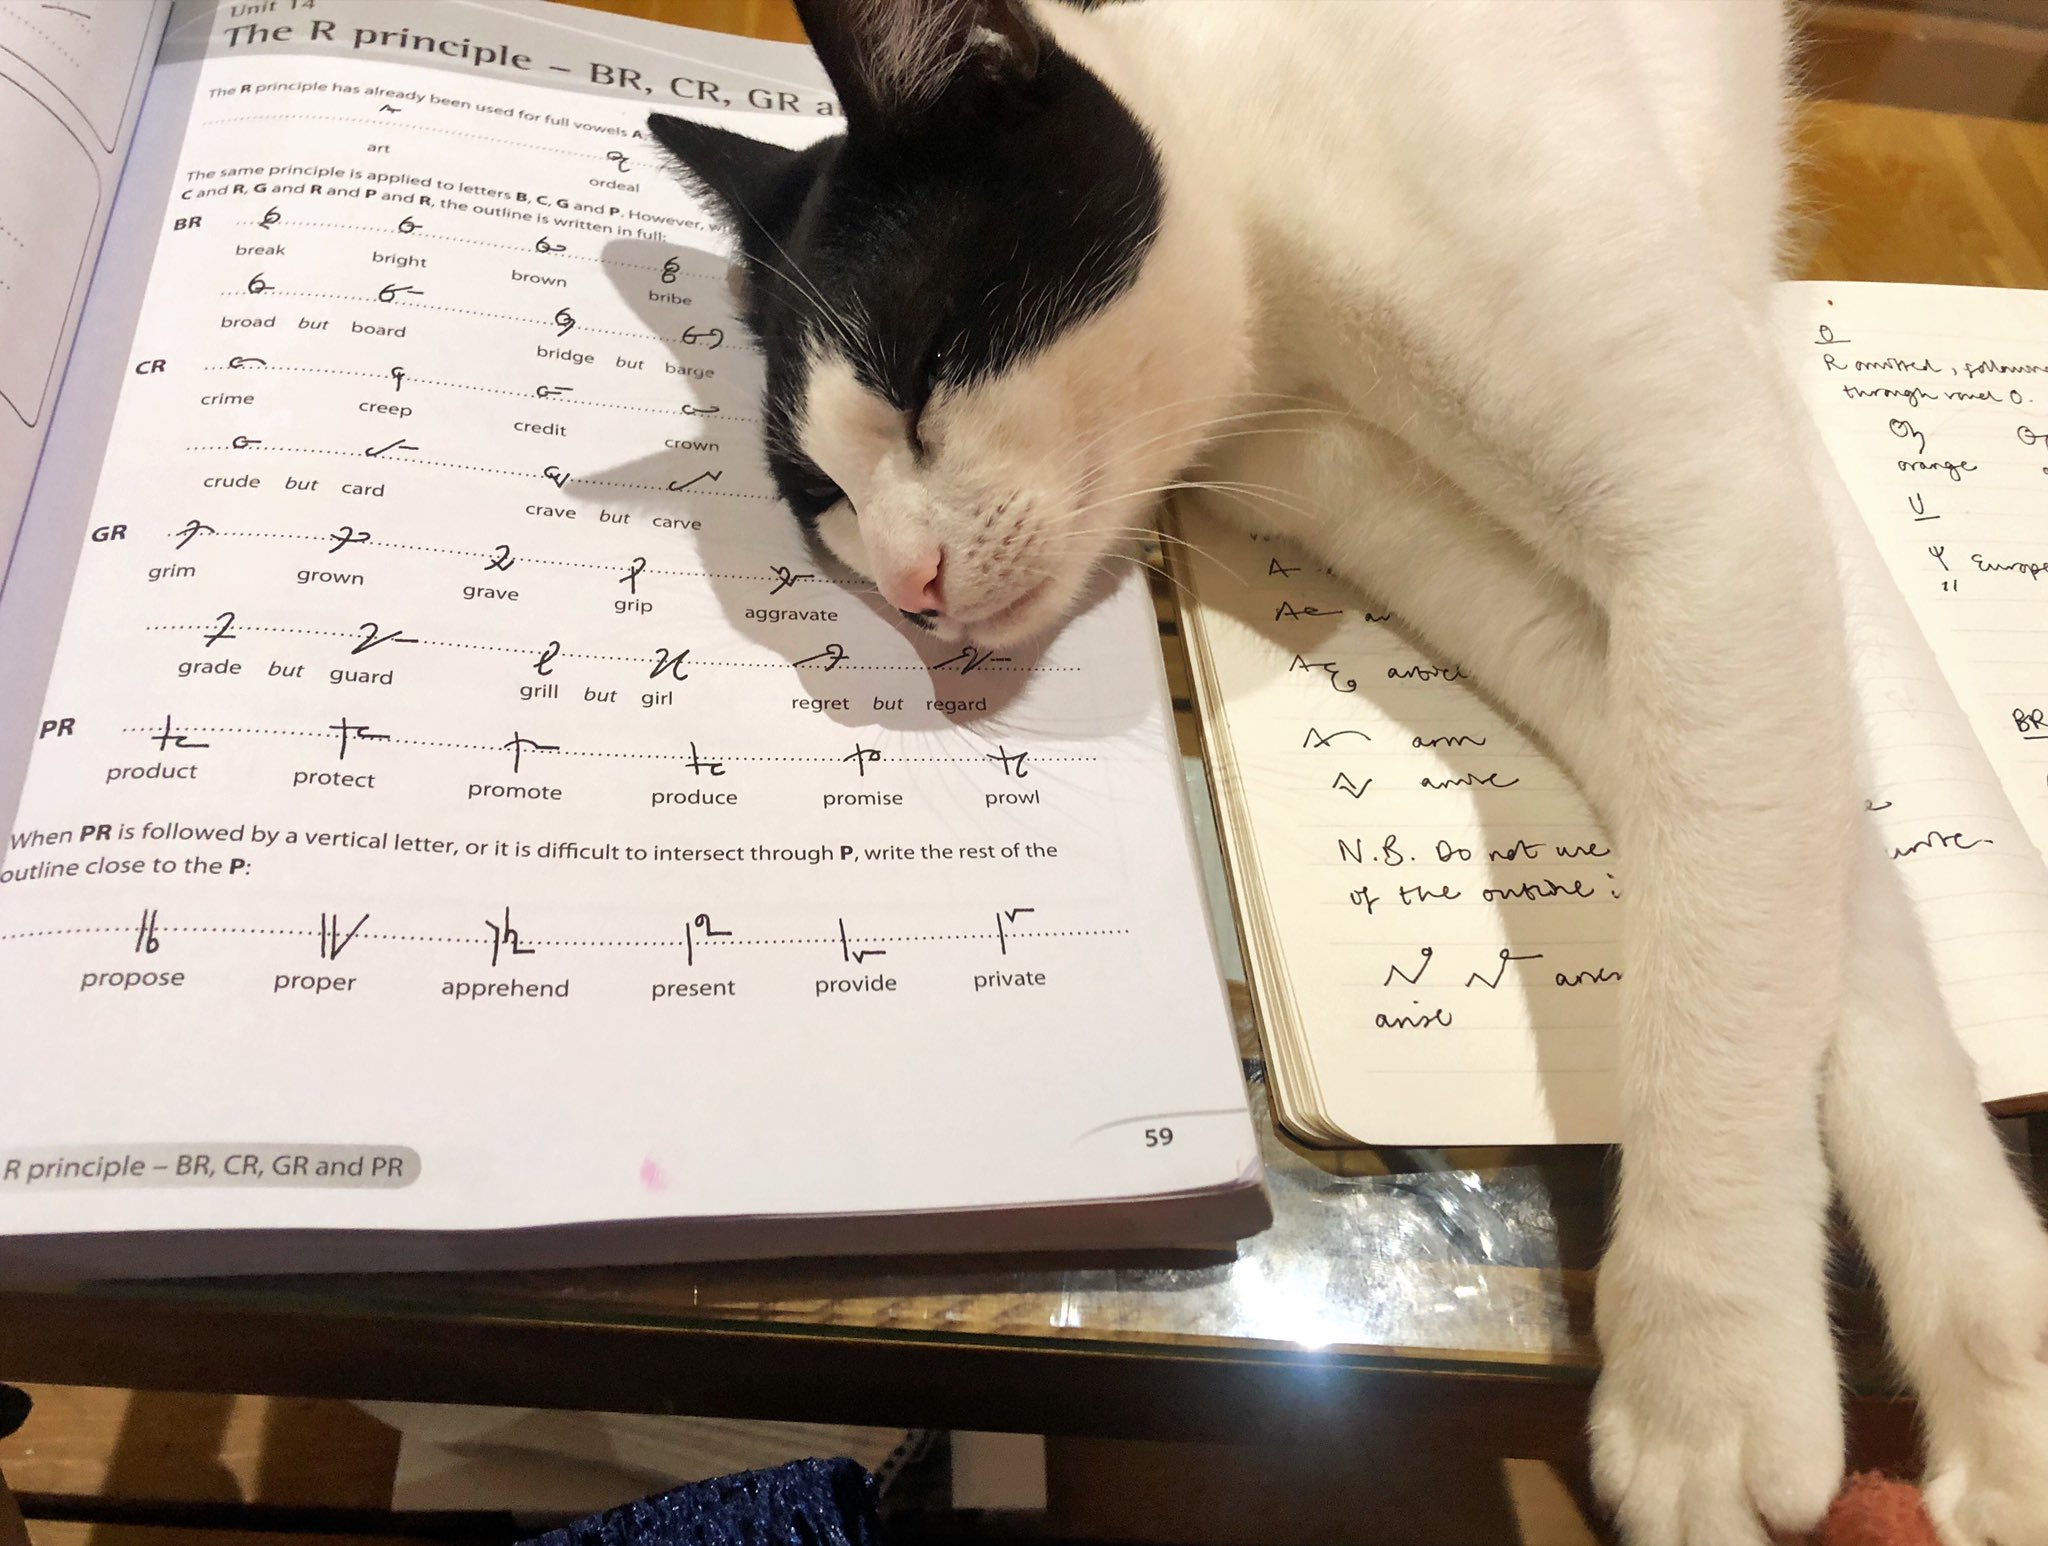 Shorthand: Black and white cat sleeping on someone's shorthand notes